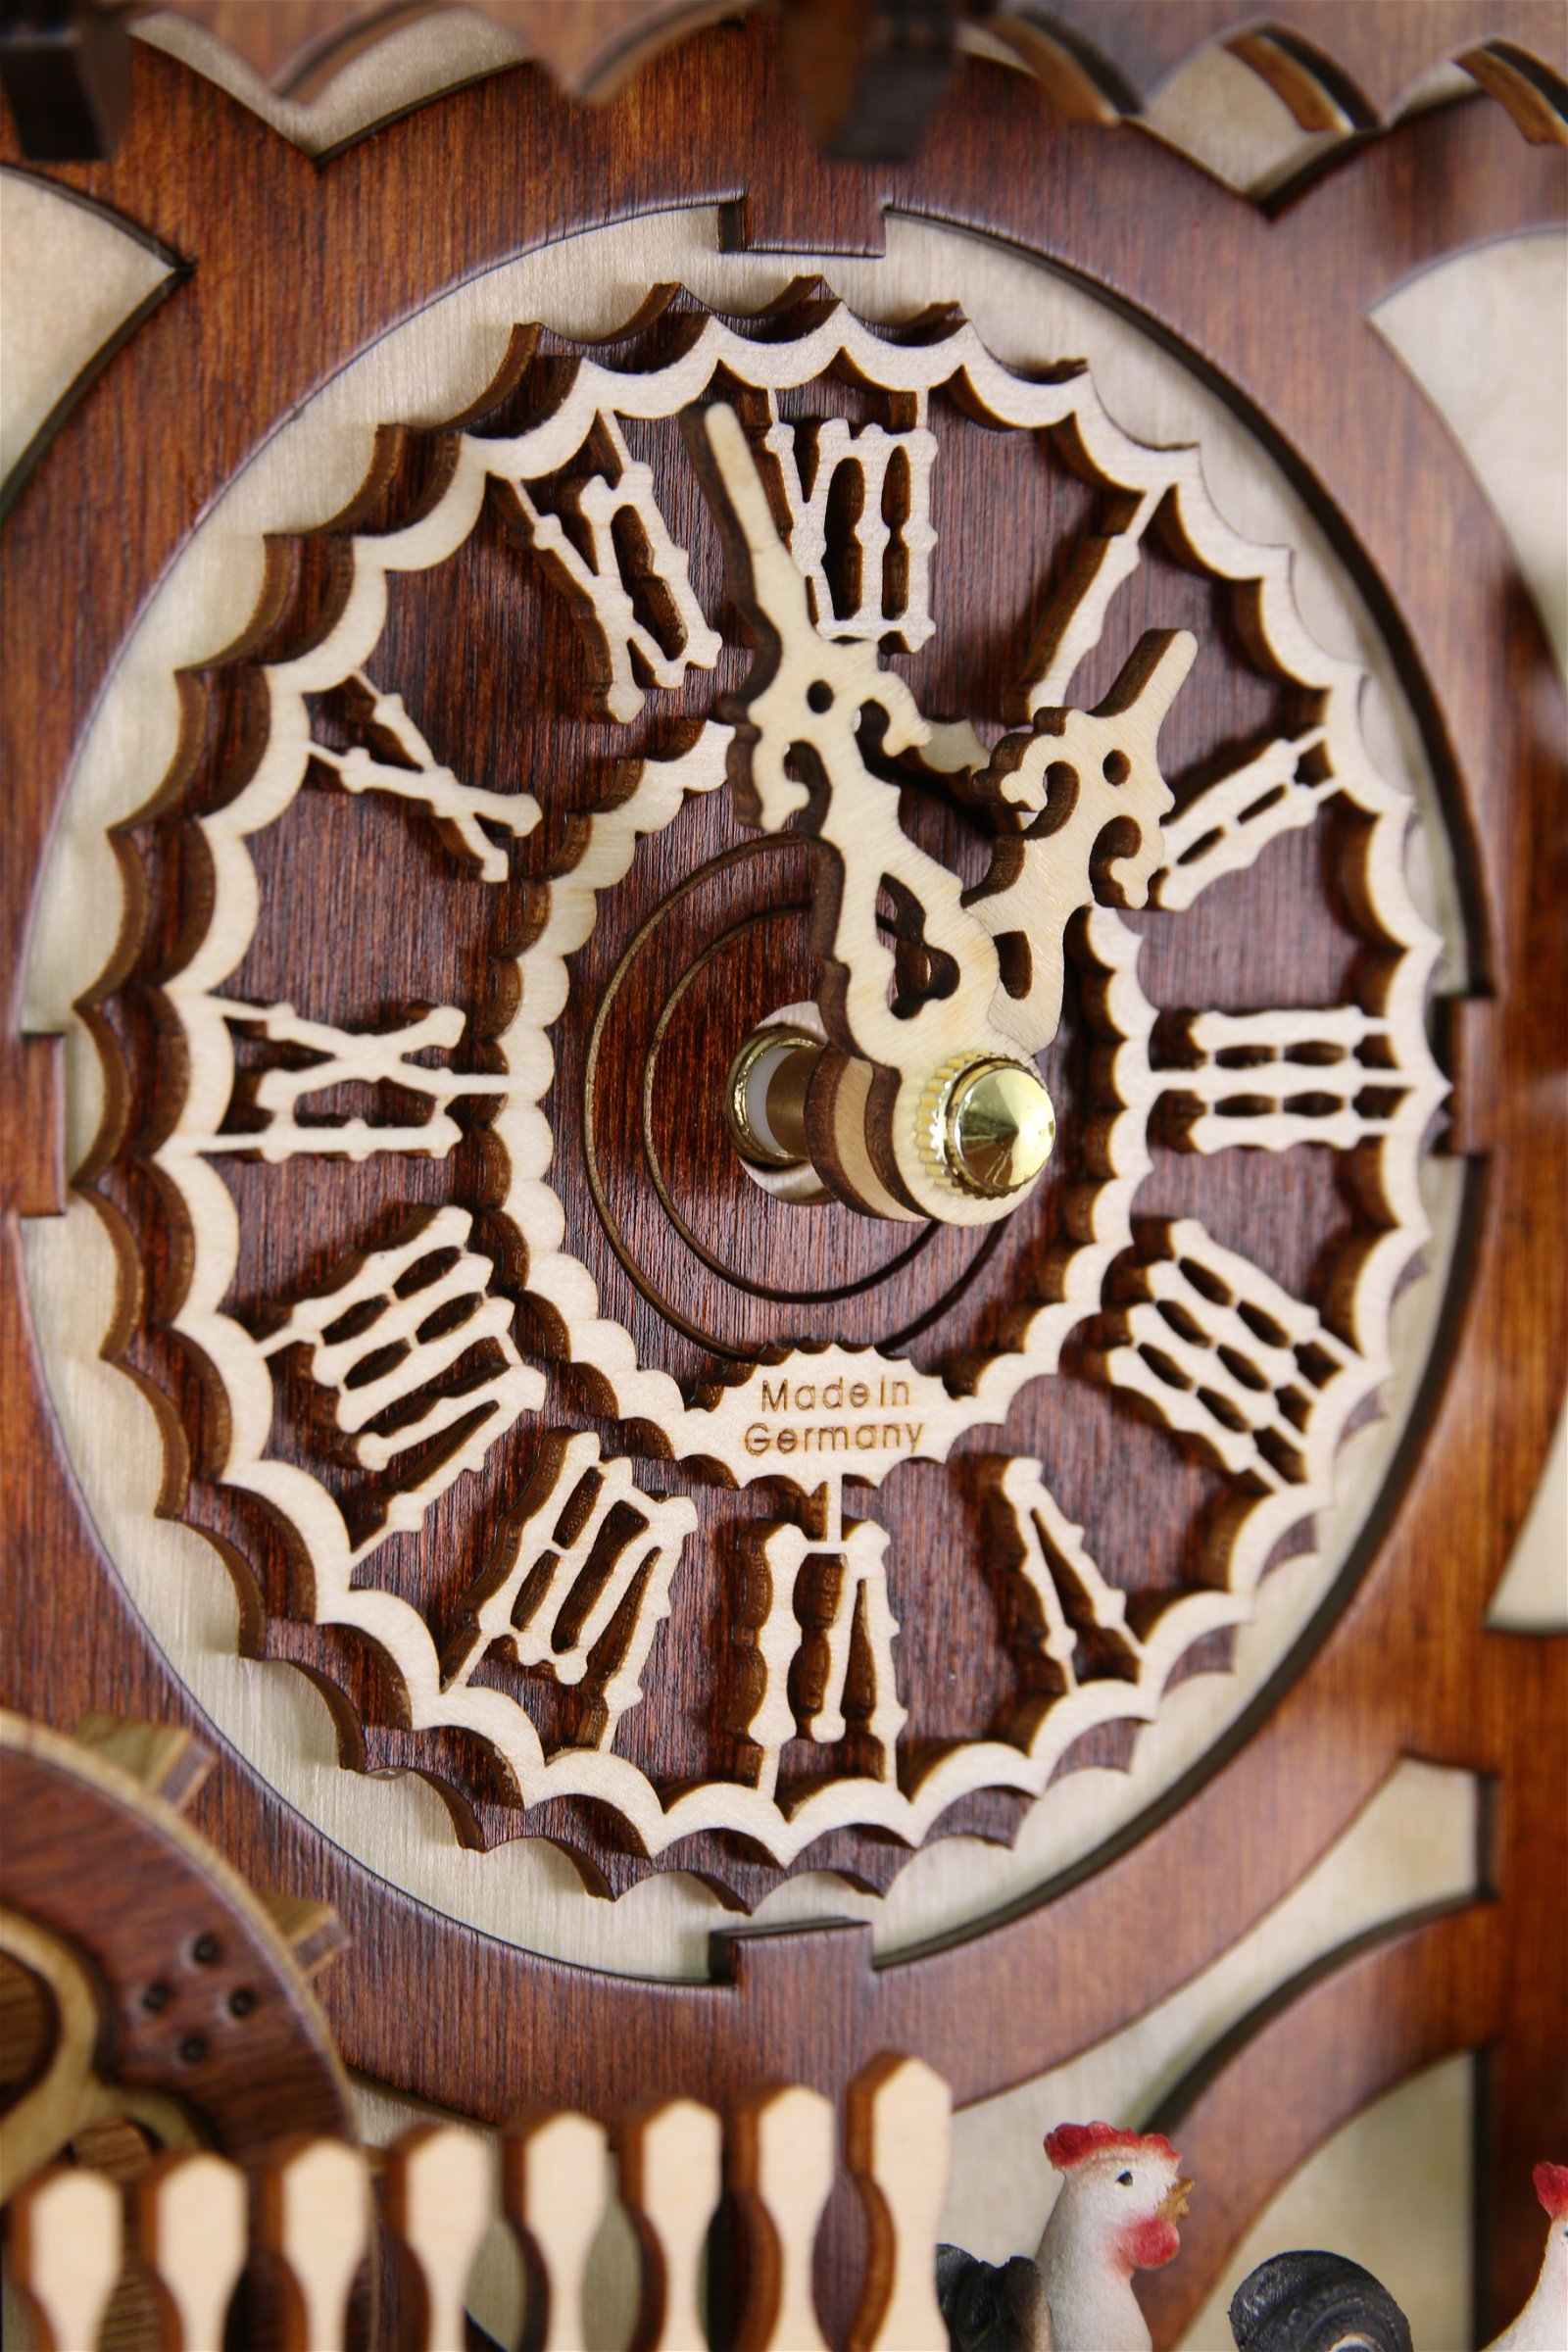 Reloj de cuco estilo “Chalet” de cuarzo 45cm de Trenkle Uhren